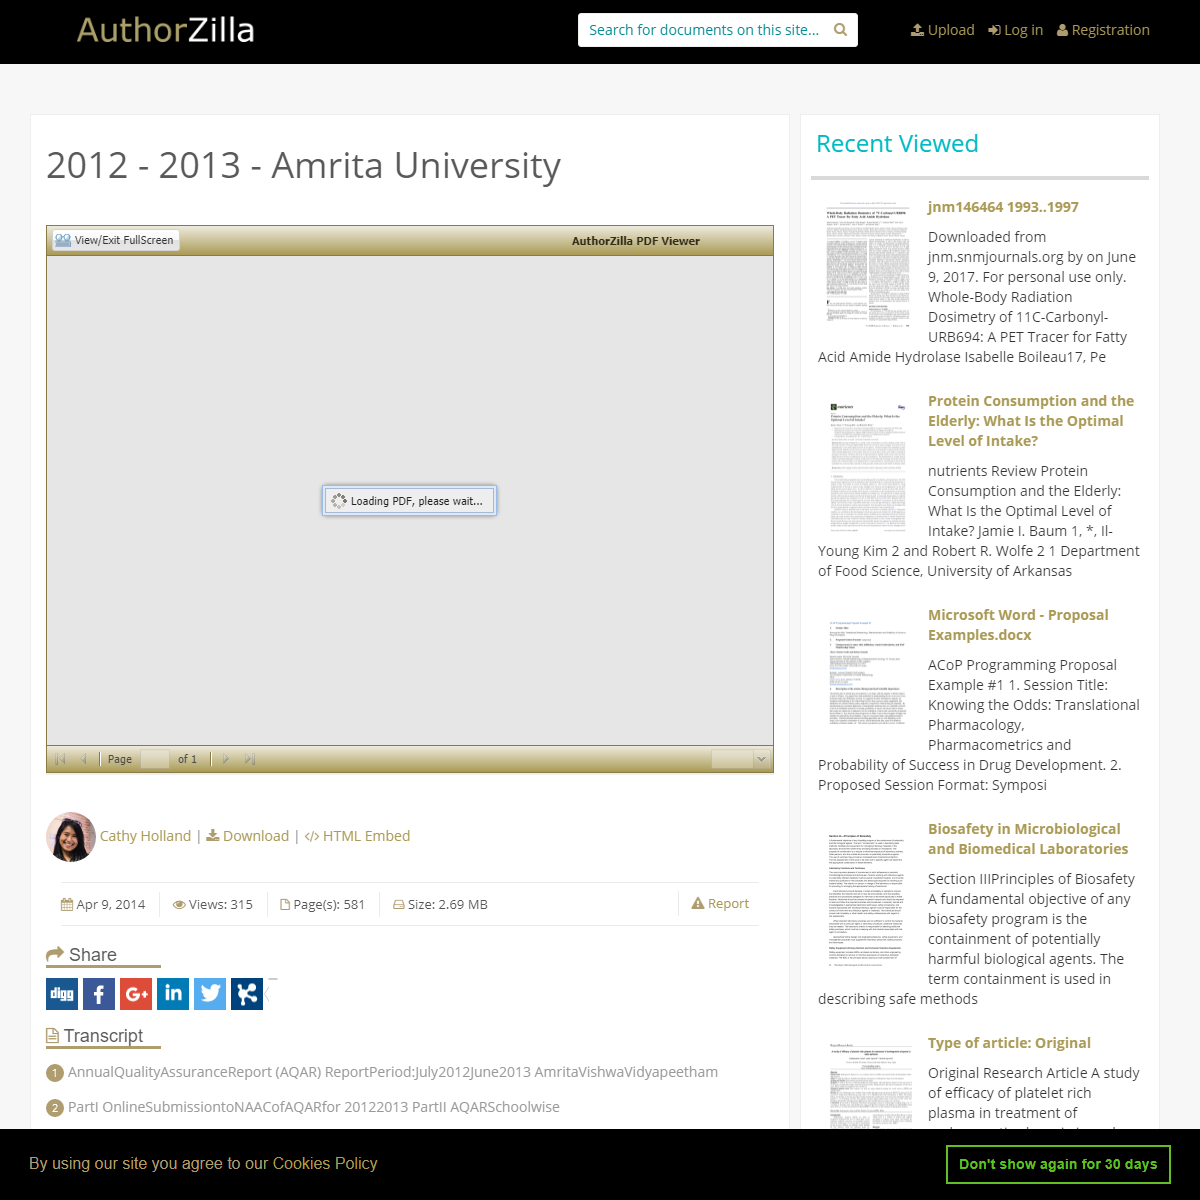 A complete backup of https://authorzilla.com/6gpd0/2012-2013-amrita-university.html